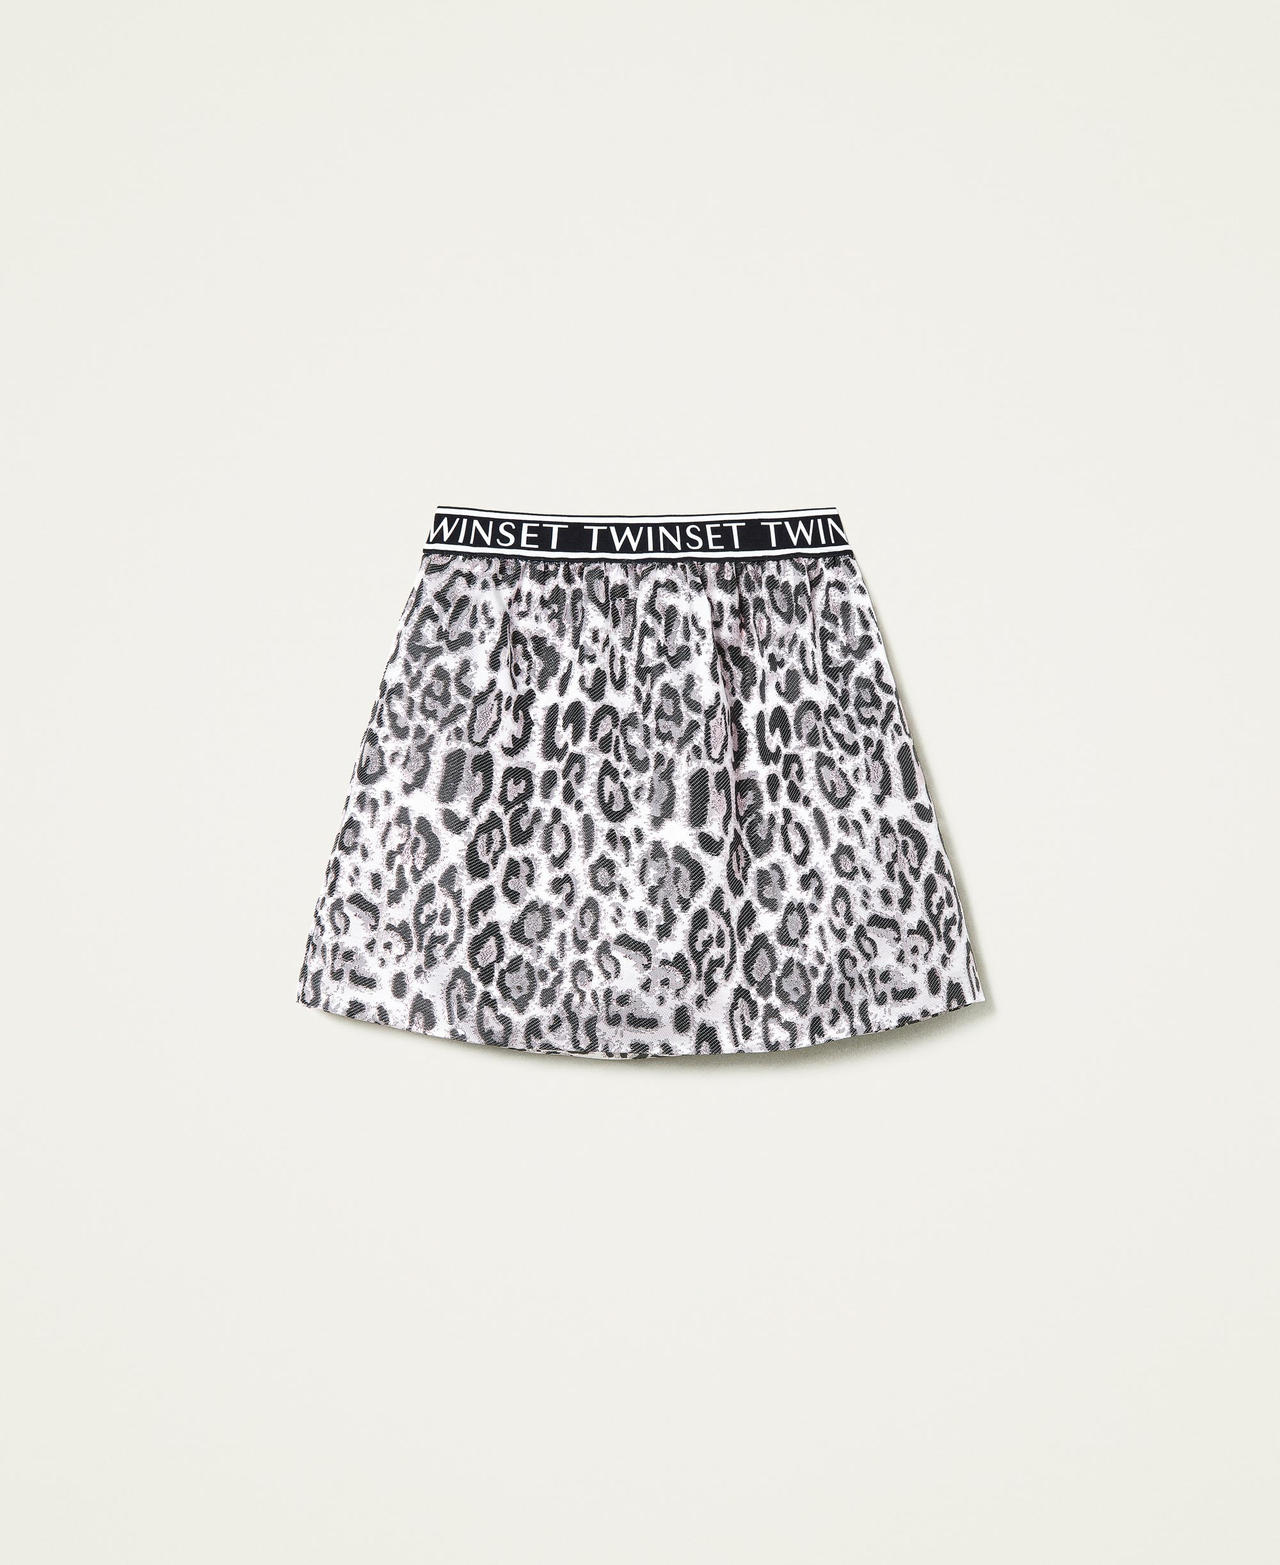 Animal print jacquard skirt Carmine Rose Leopard Spot Jacquard Girl 212GJ2260-0S